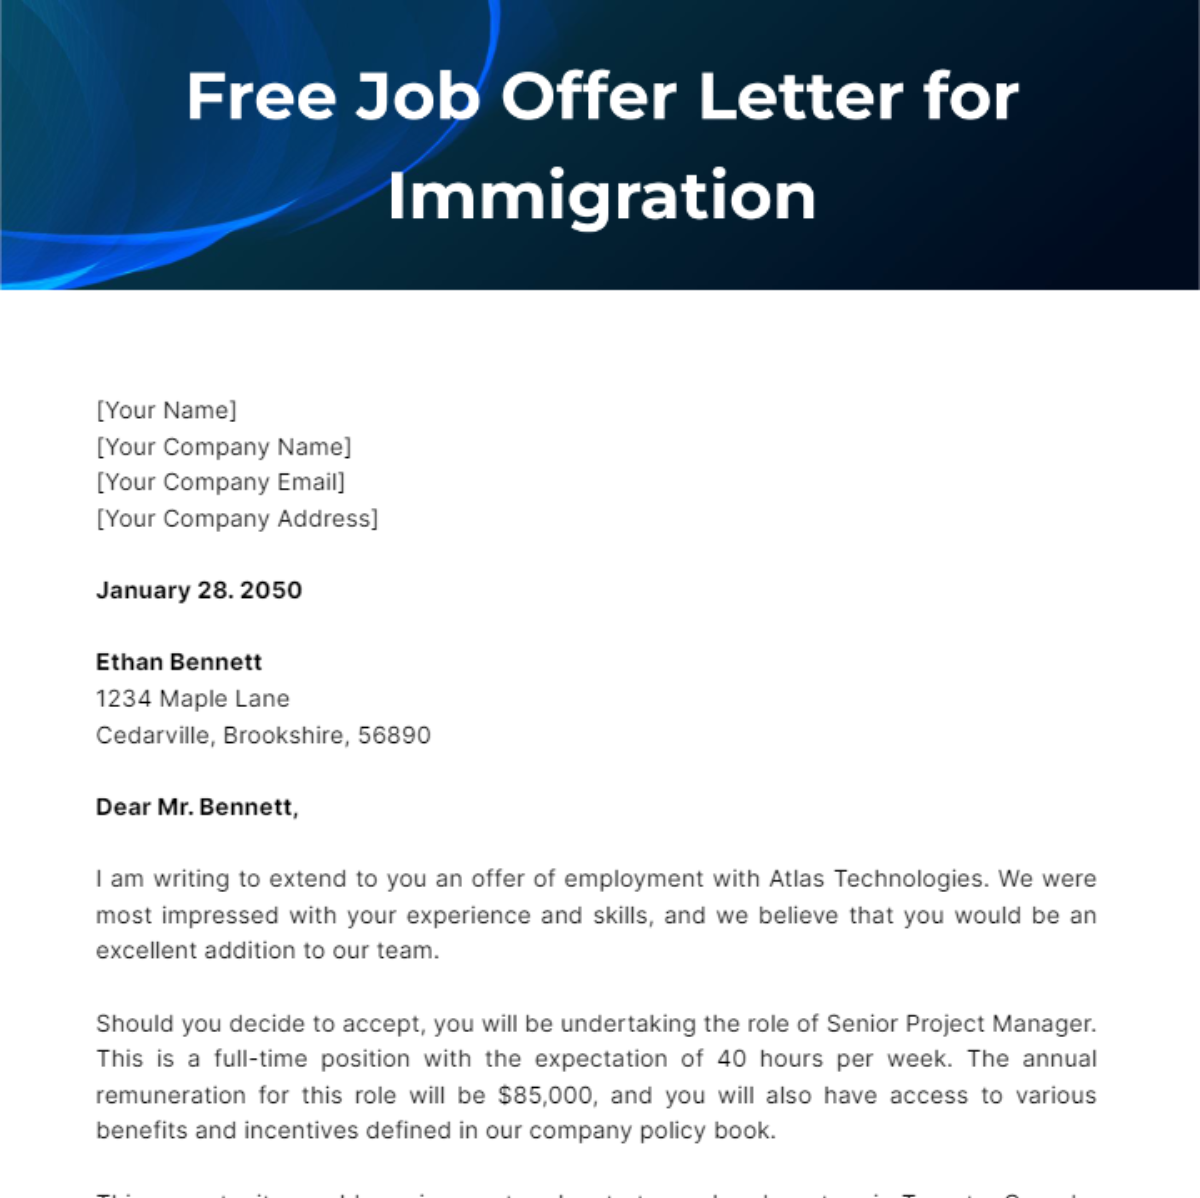 Job Offer Letter for Immigration Template